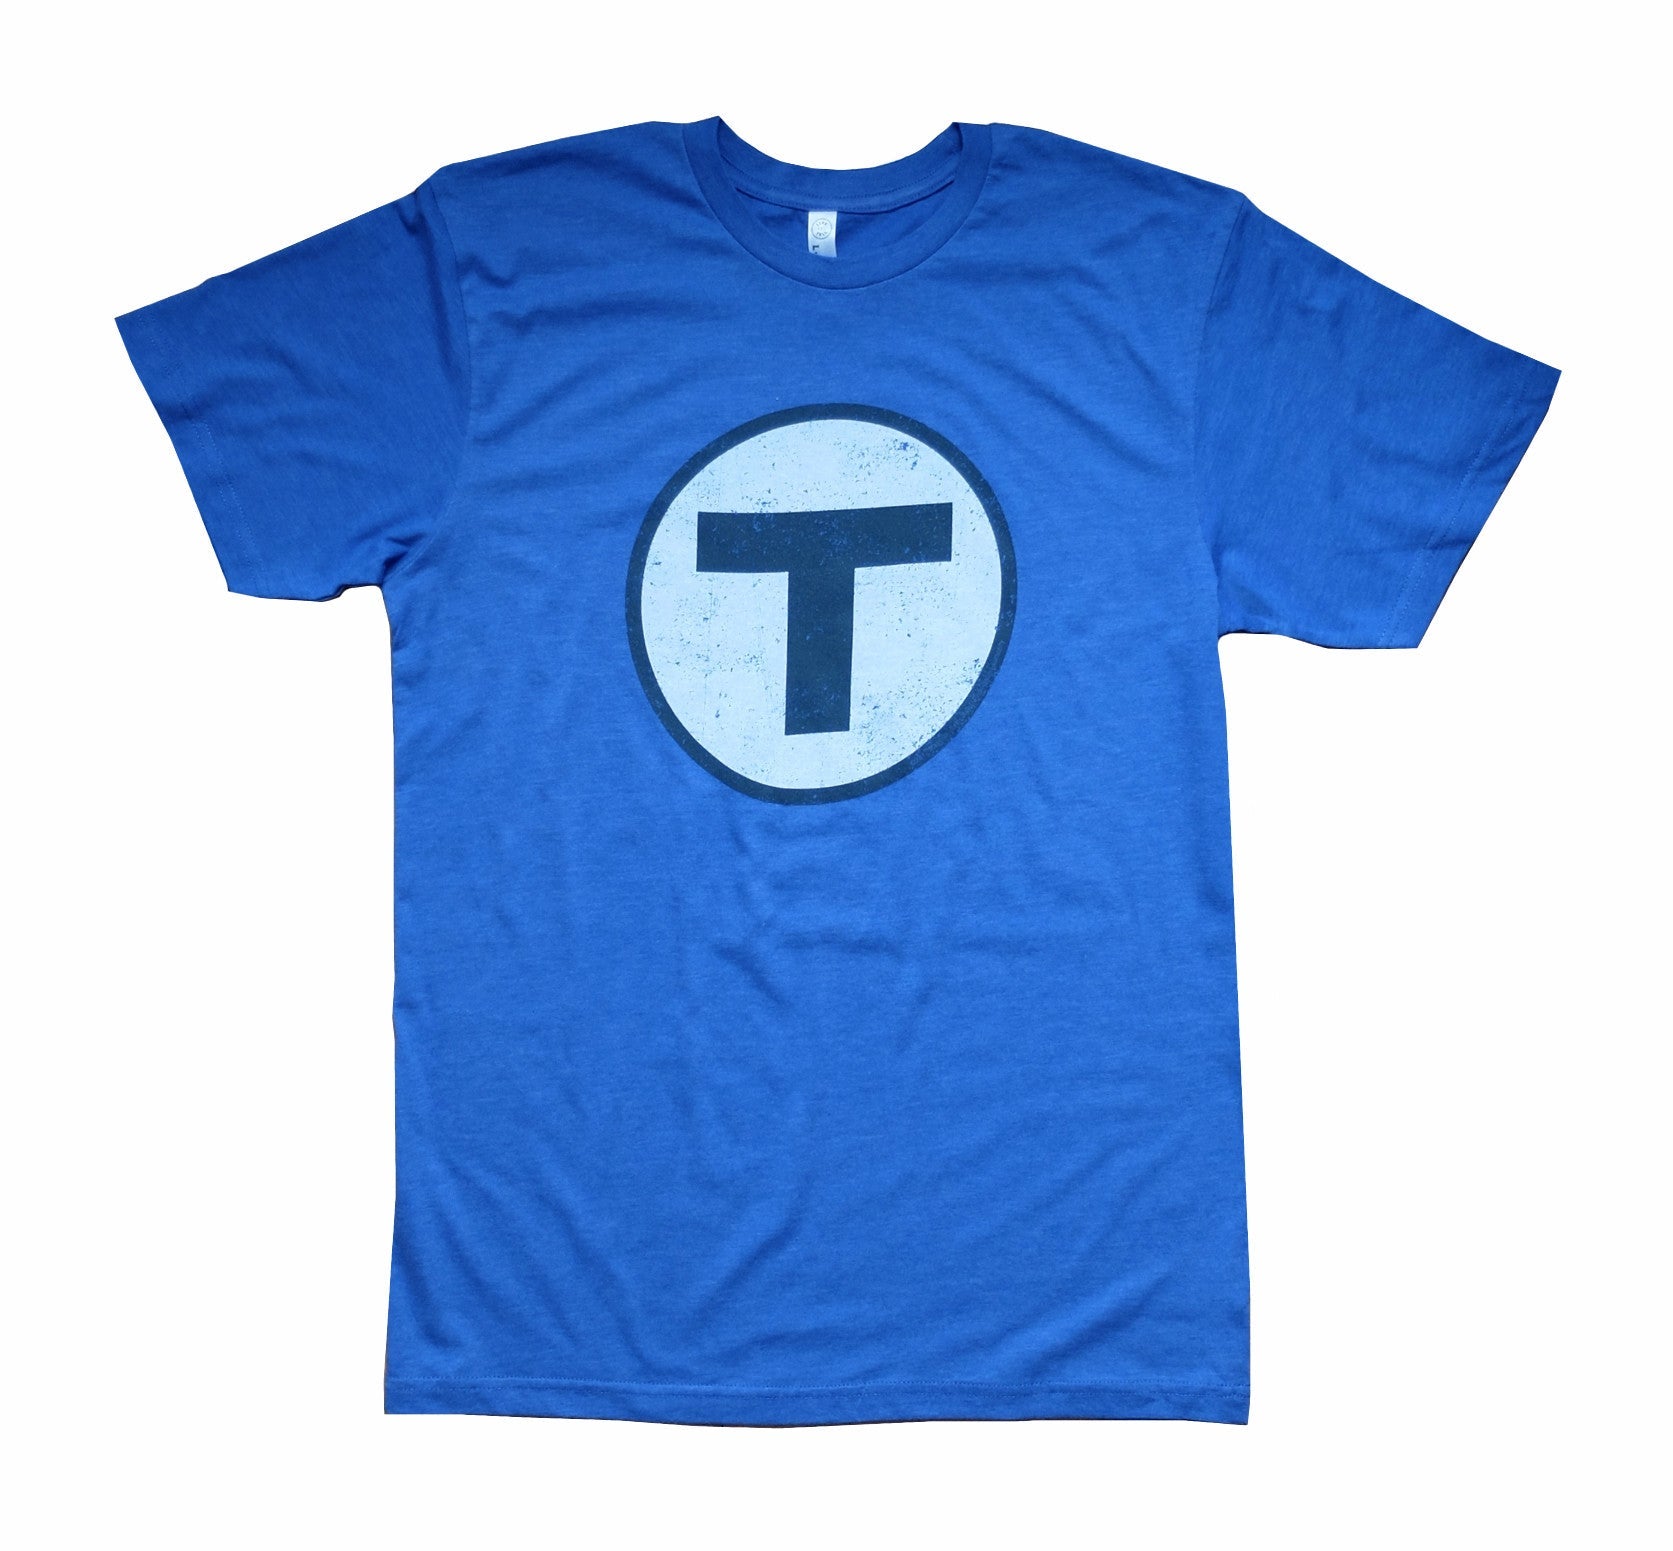 Blue T-Shirt with White & Black MBTA "T" Logo